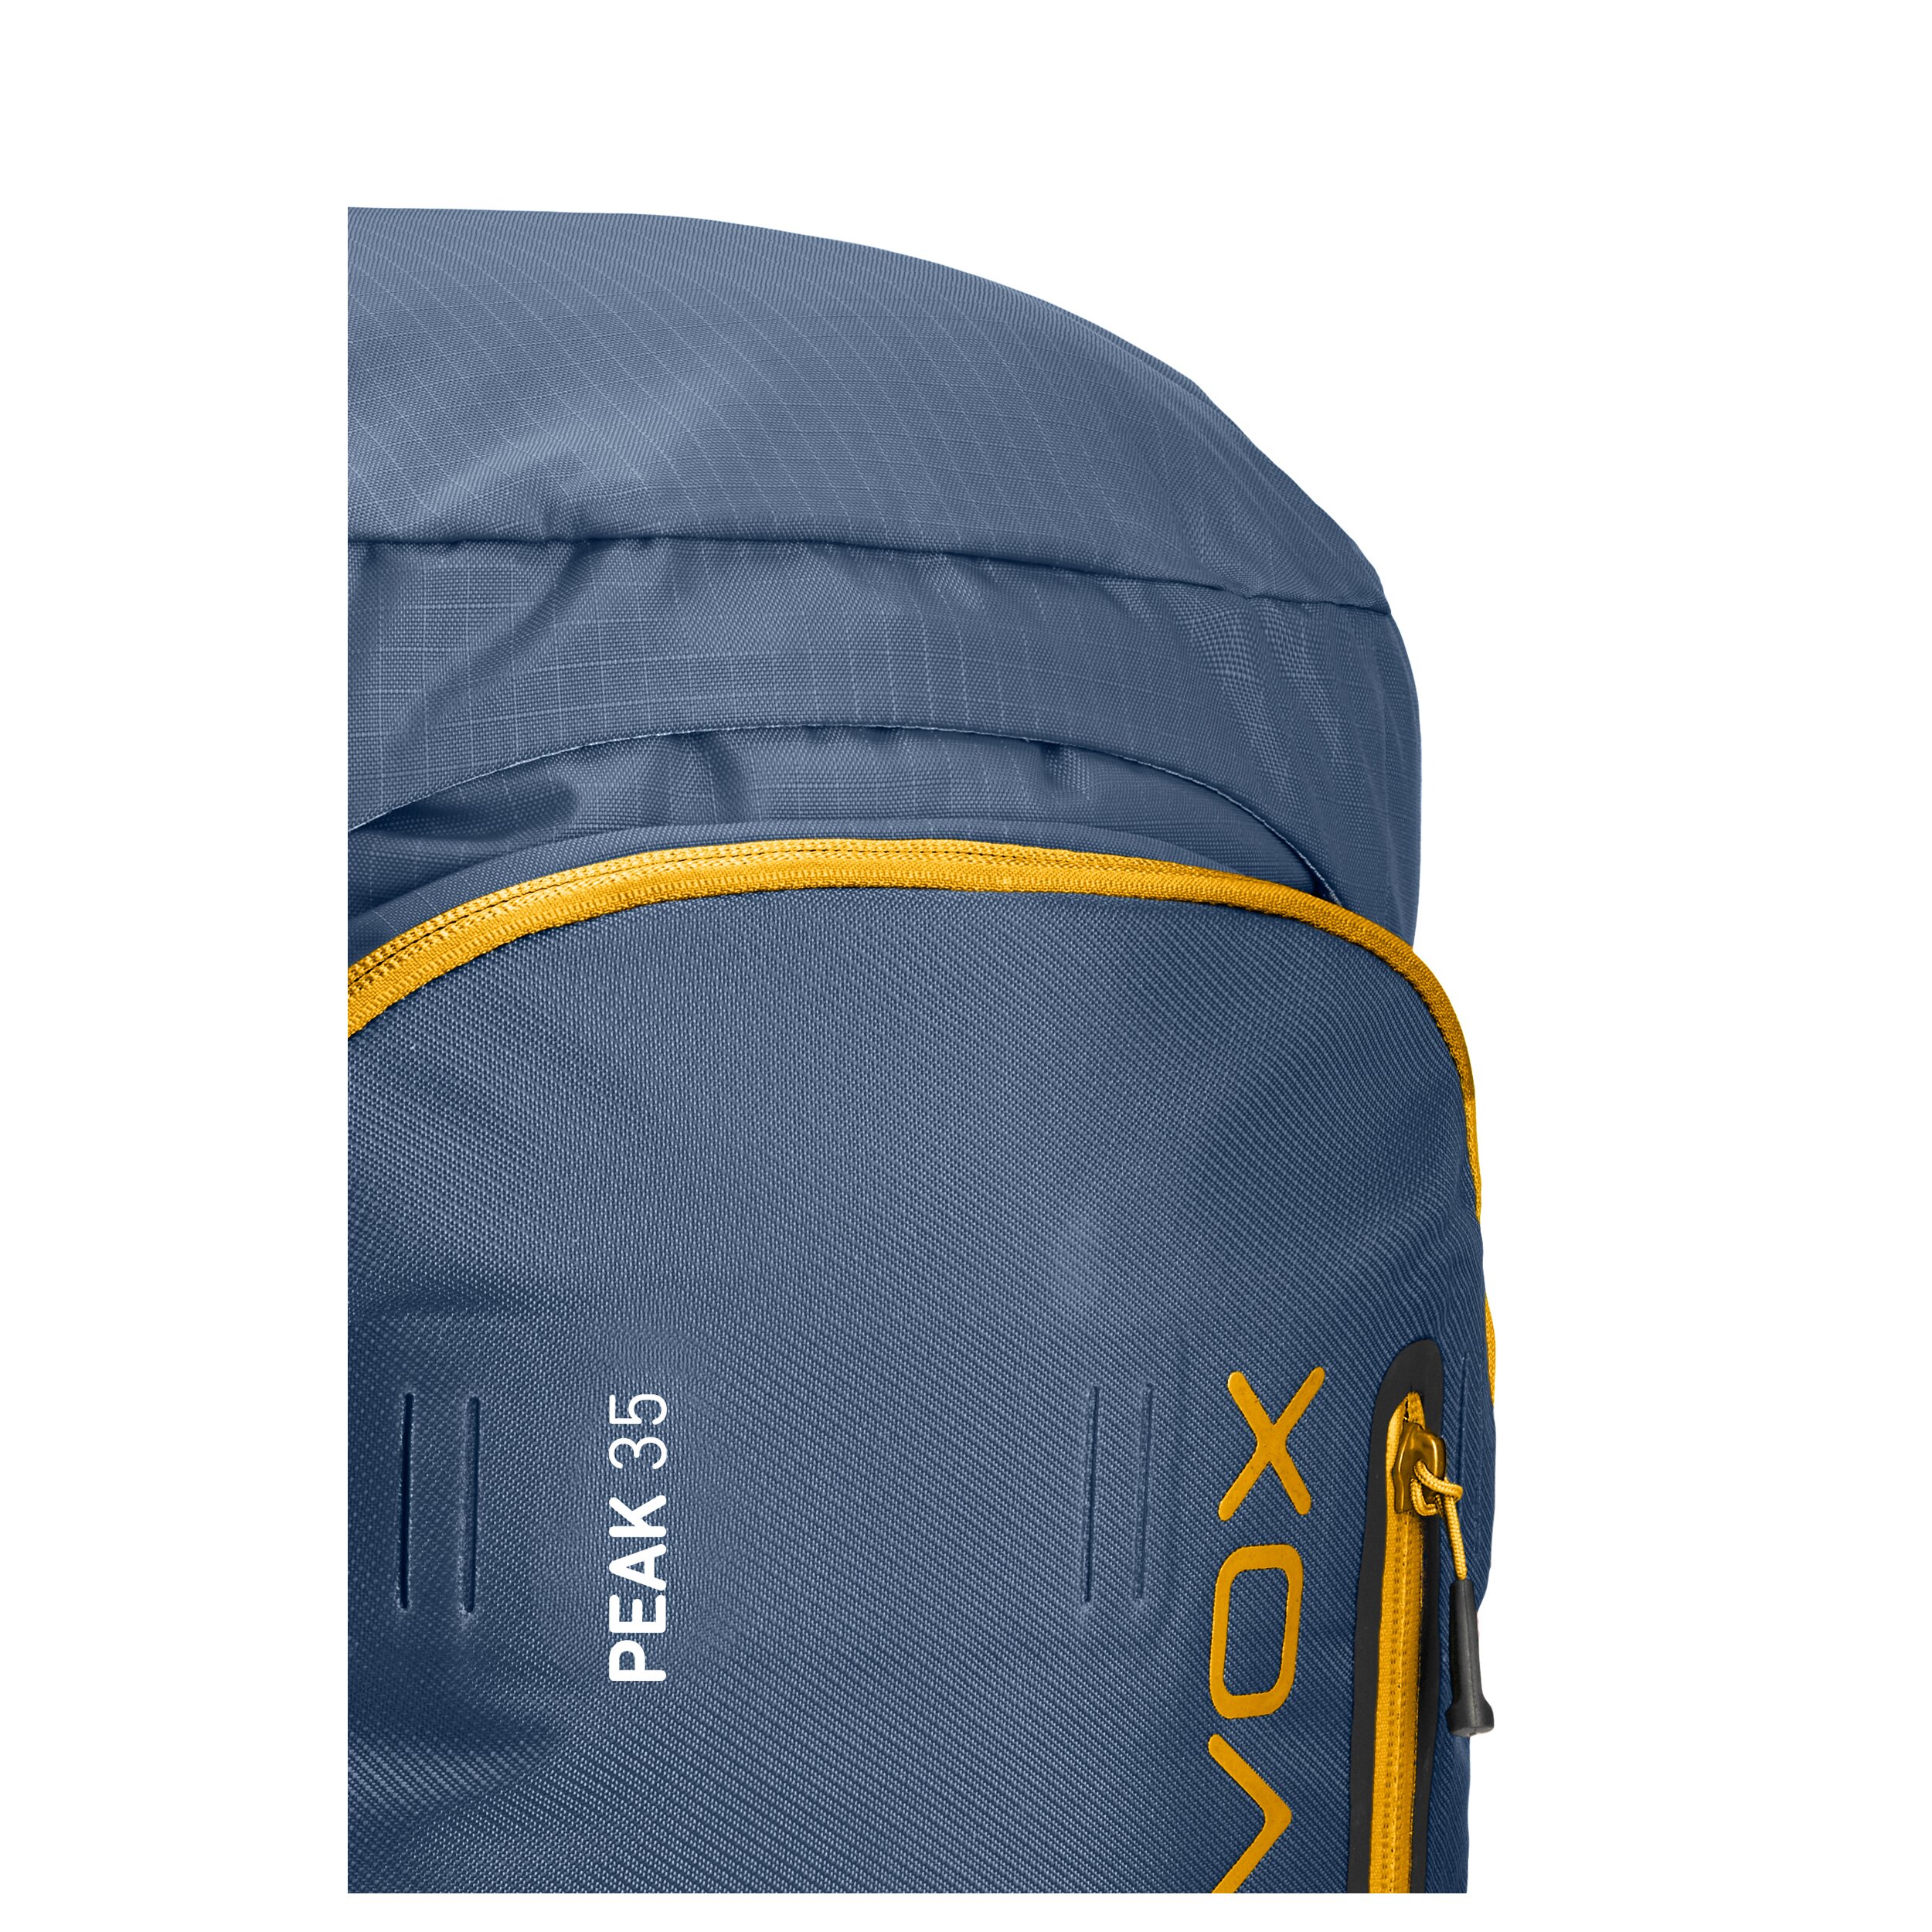 Ortovox Backpack Peak 35 l Mod 46251 Blu